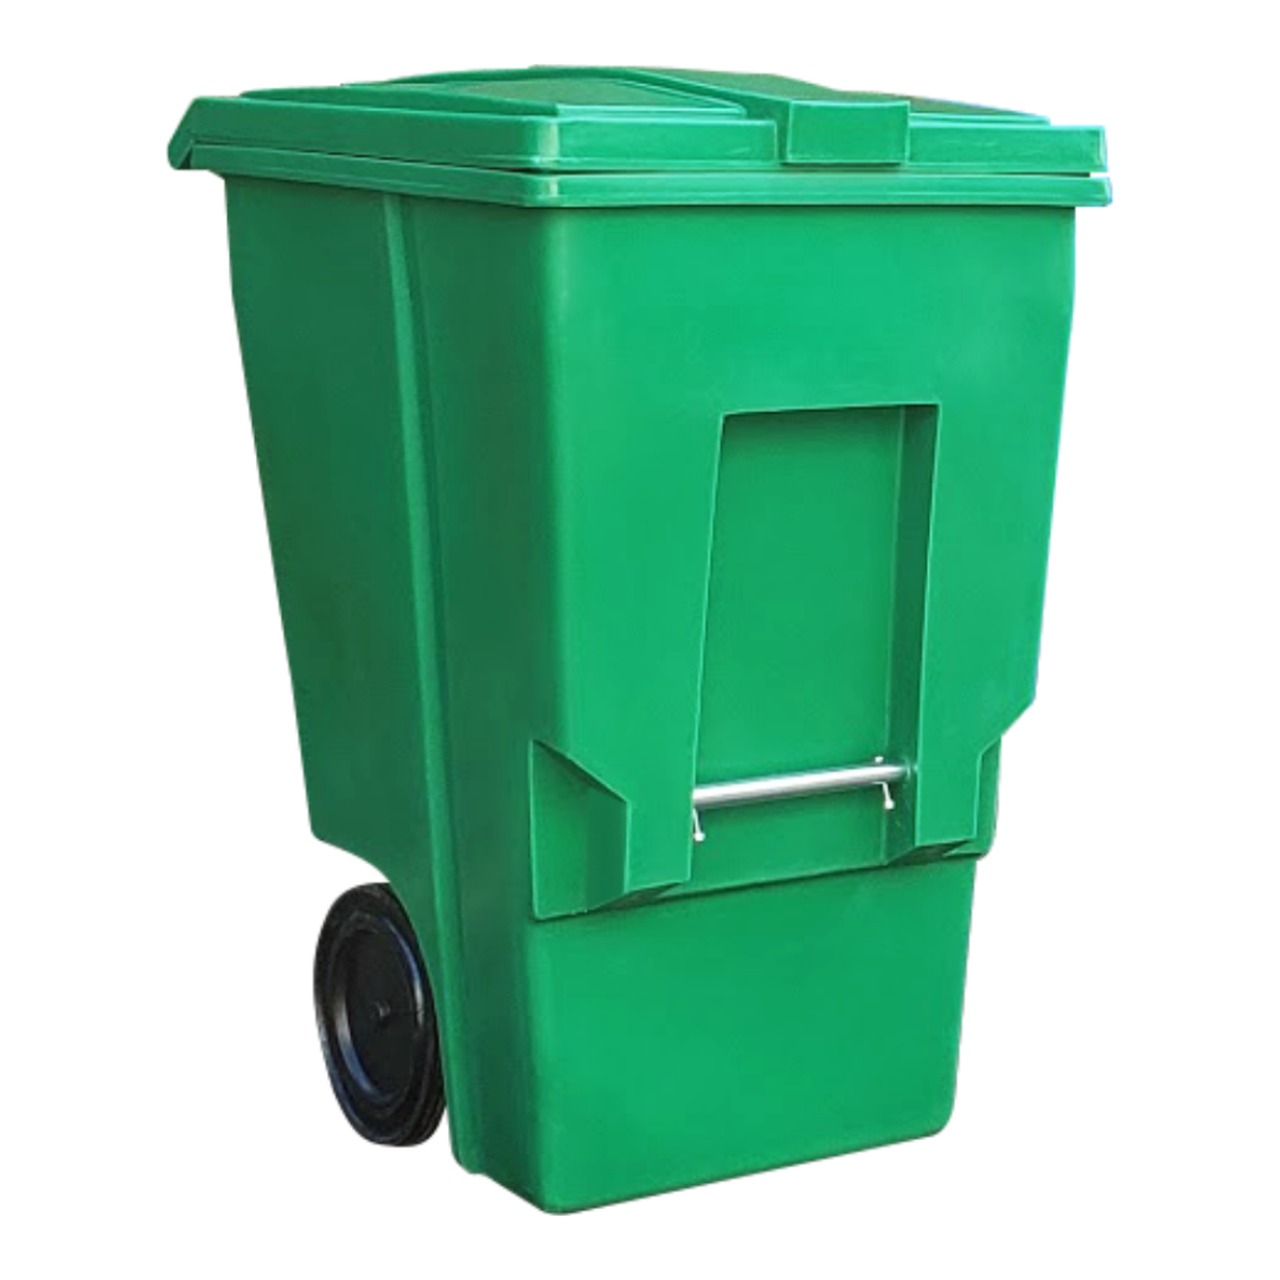 Lixeira Container de Lixo 360 Litros Sem Pedal - Com rodas - Plásticos  Ipiranga - Bombonas, Caixas, Estrados, Lixeiras, Pallets e mais